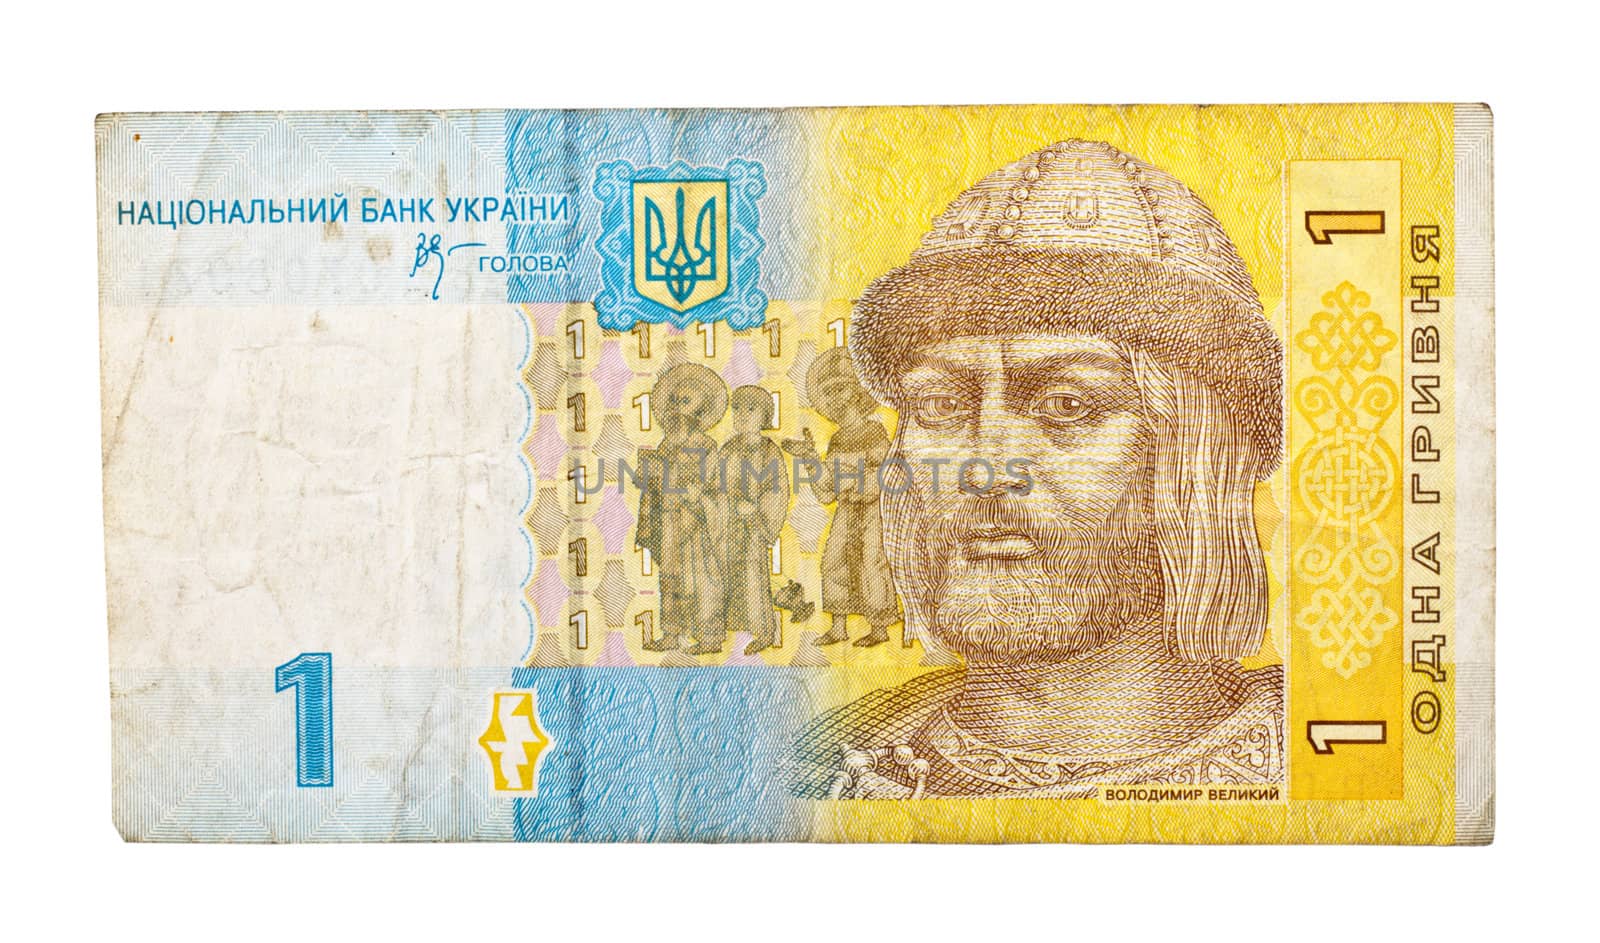 Ukrainian Money (hryvnia) by petr_malyshev